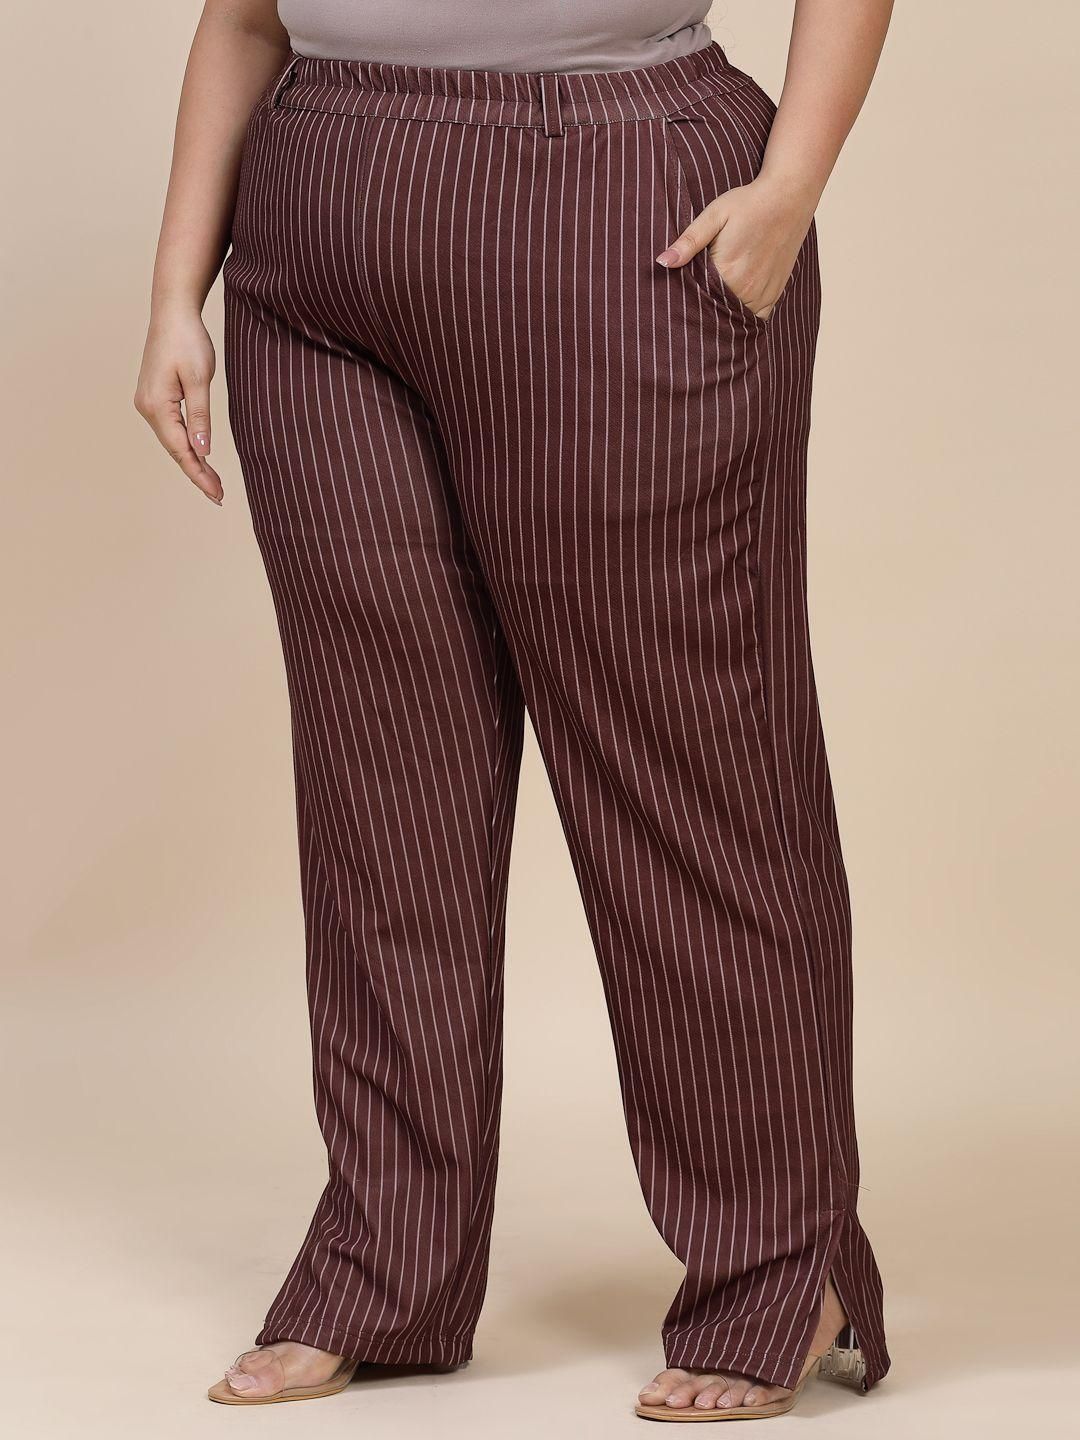 Flambeur Women's Plus Size Casual Stripe Print Trouser